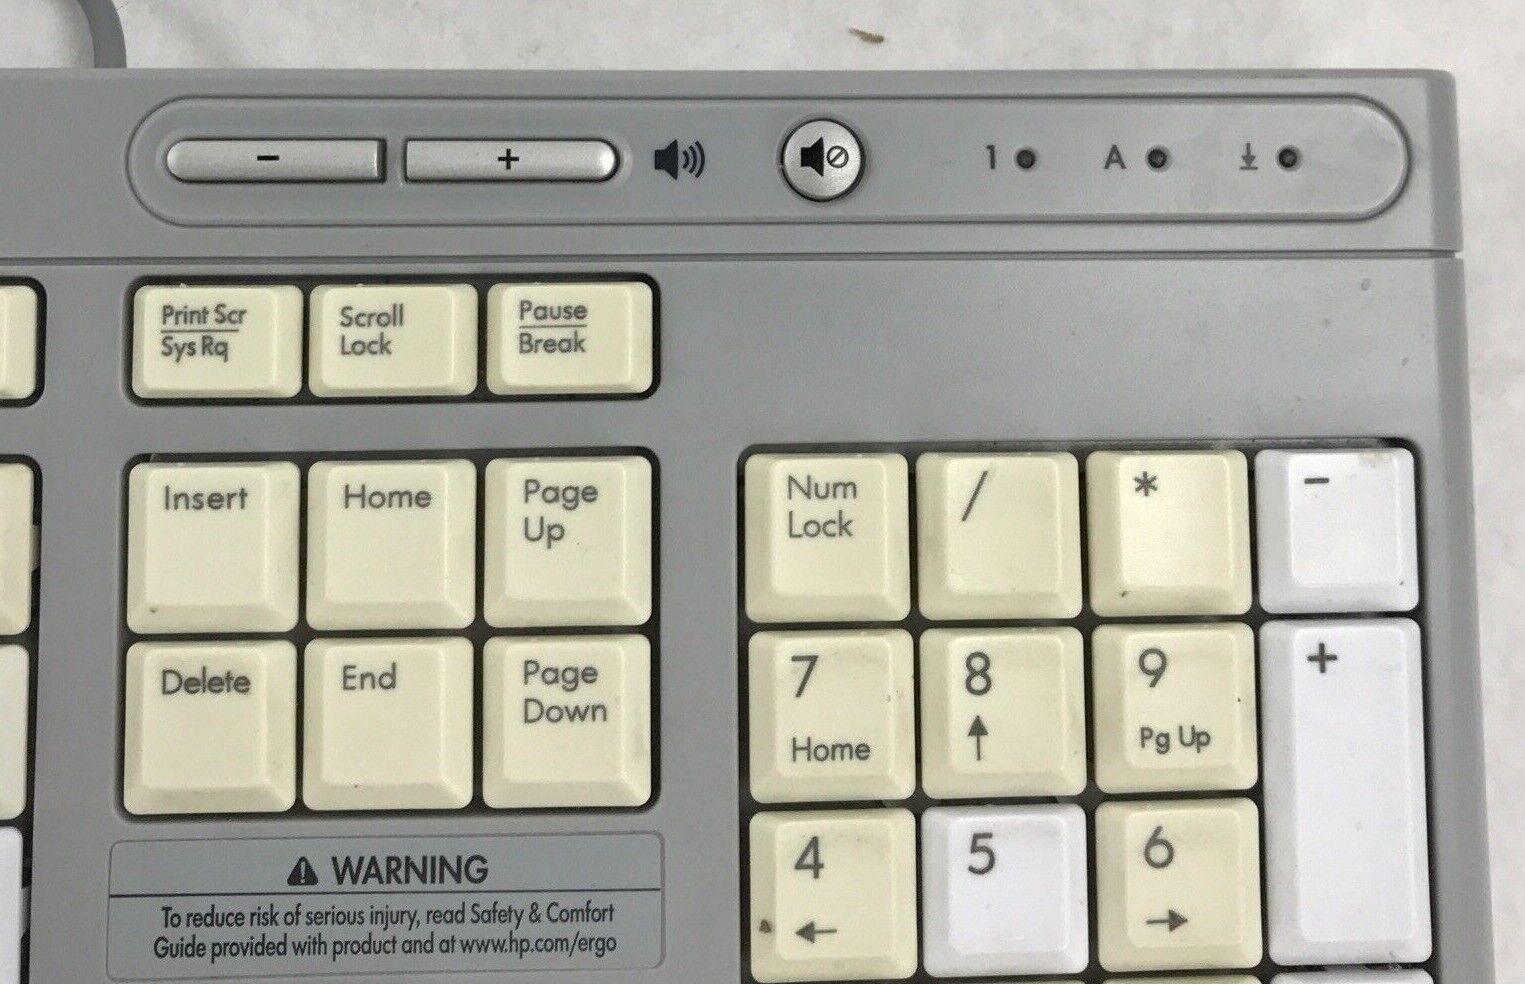 Vintage HP 5137 English Gray PS/2 Keyboard 5V 50mA FCC ID:E5XKB5137 5188-0992